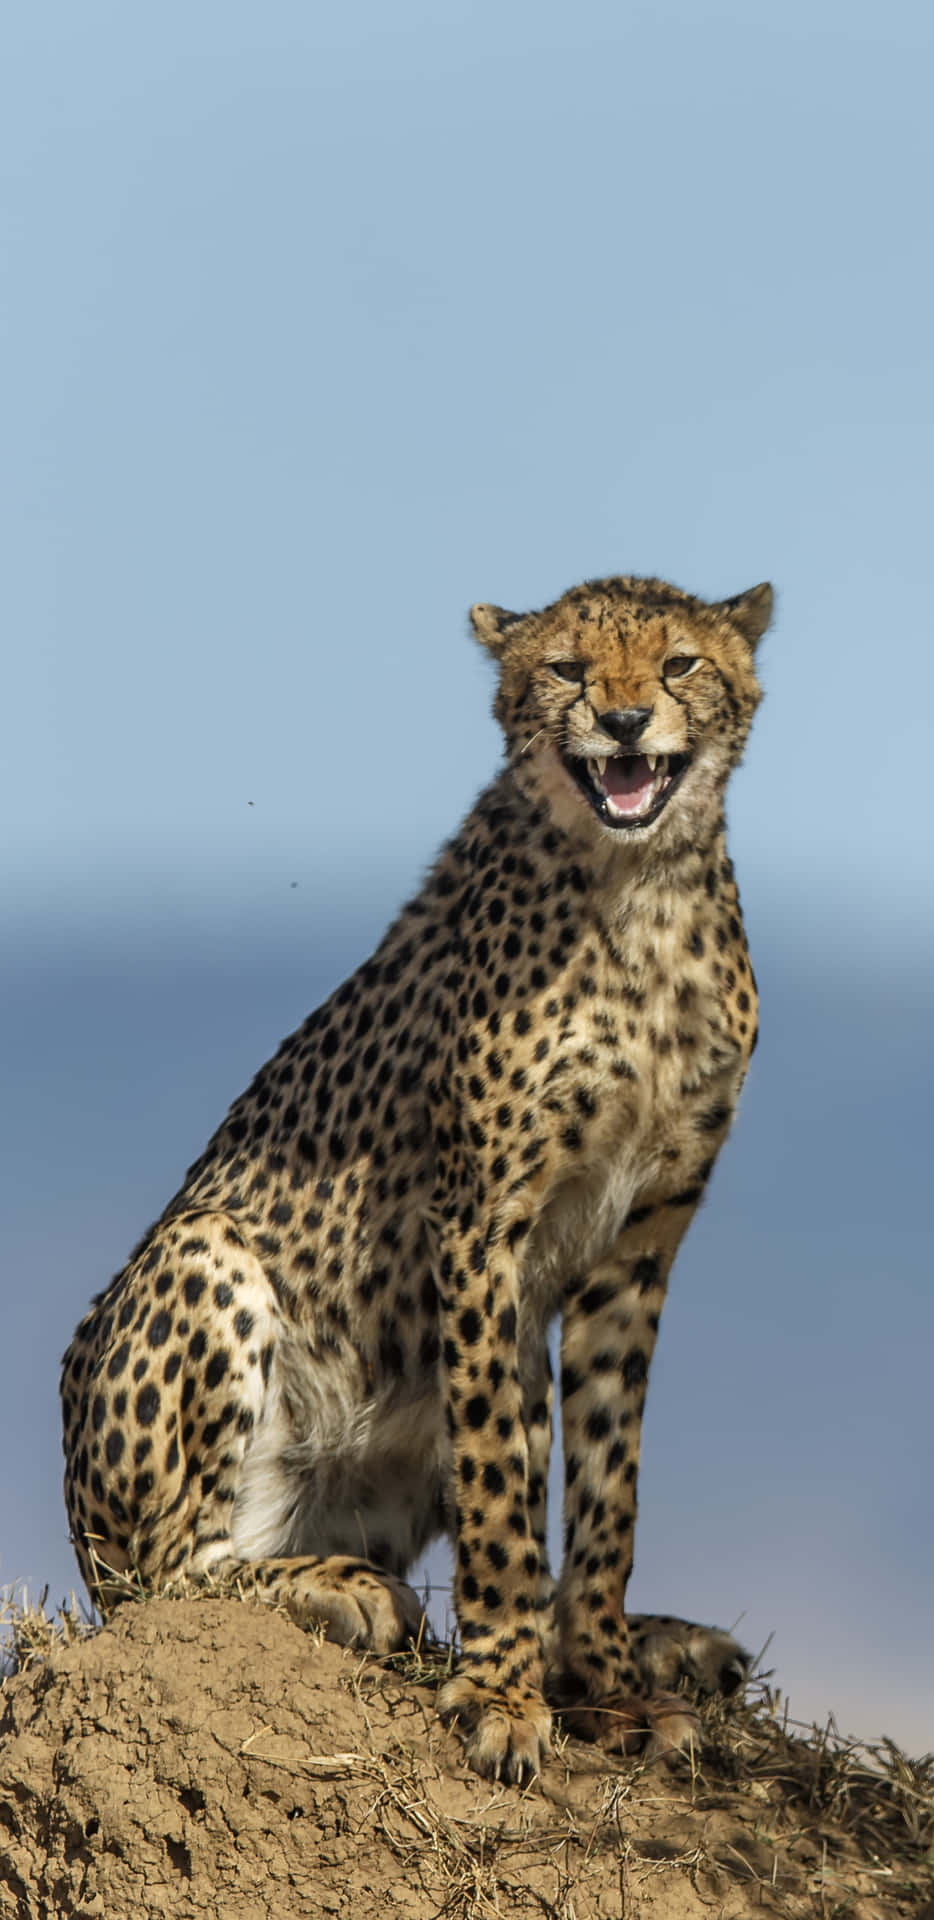 A beautiful close-up of a Cheetah in its natural habitat Wallpaper